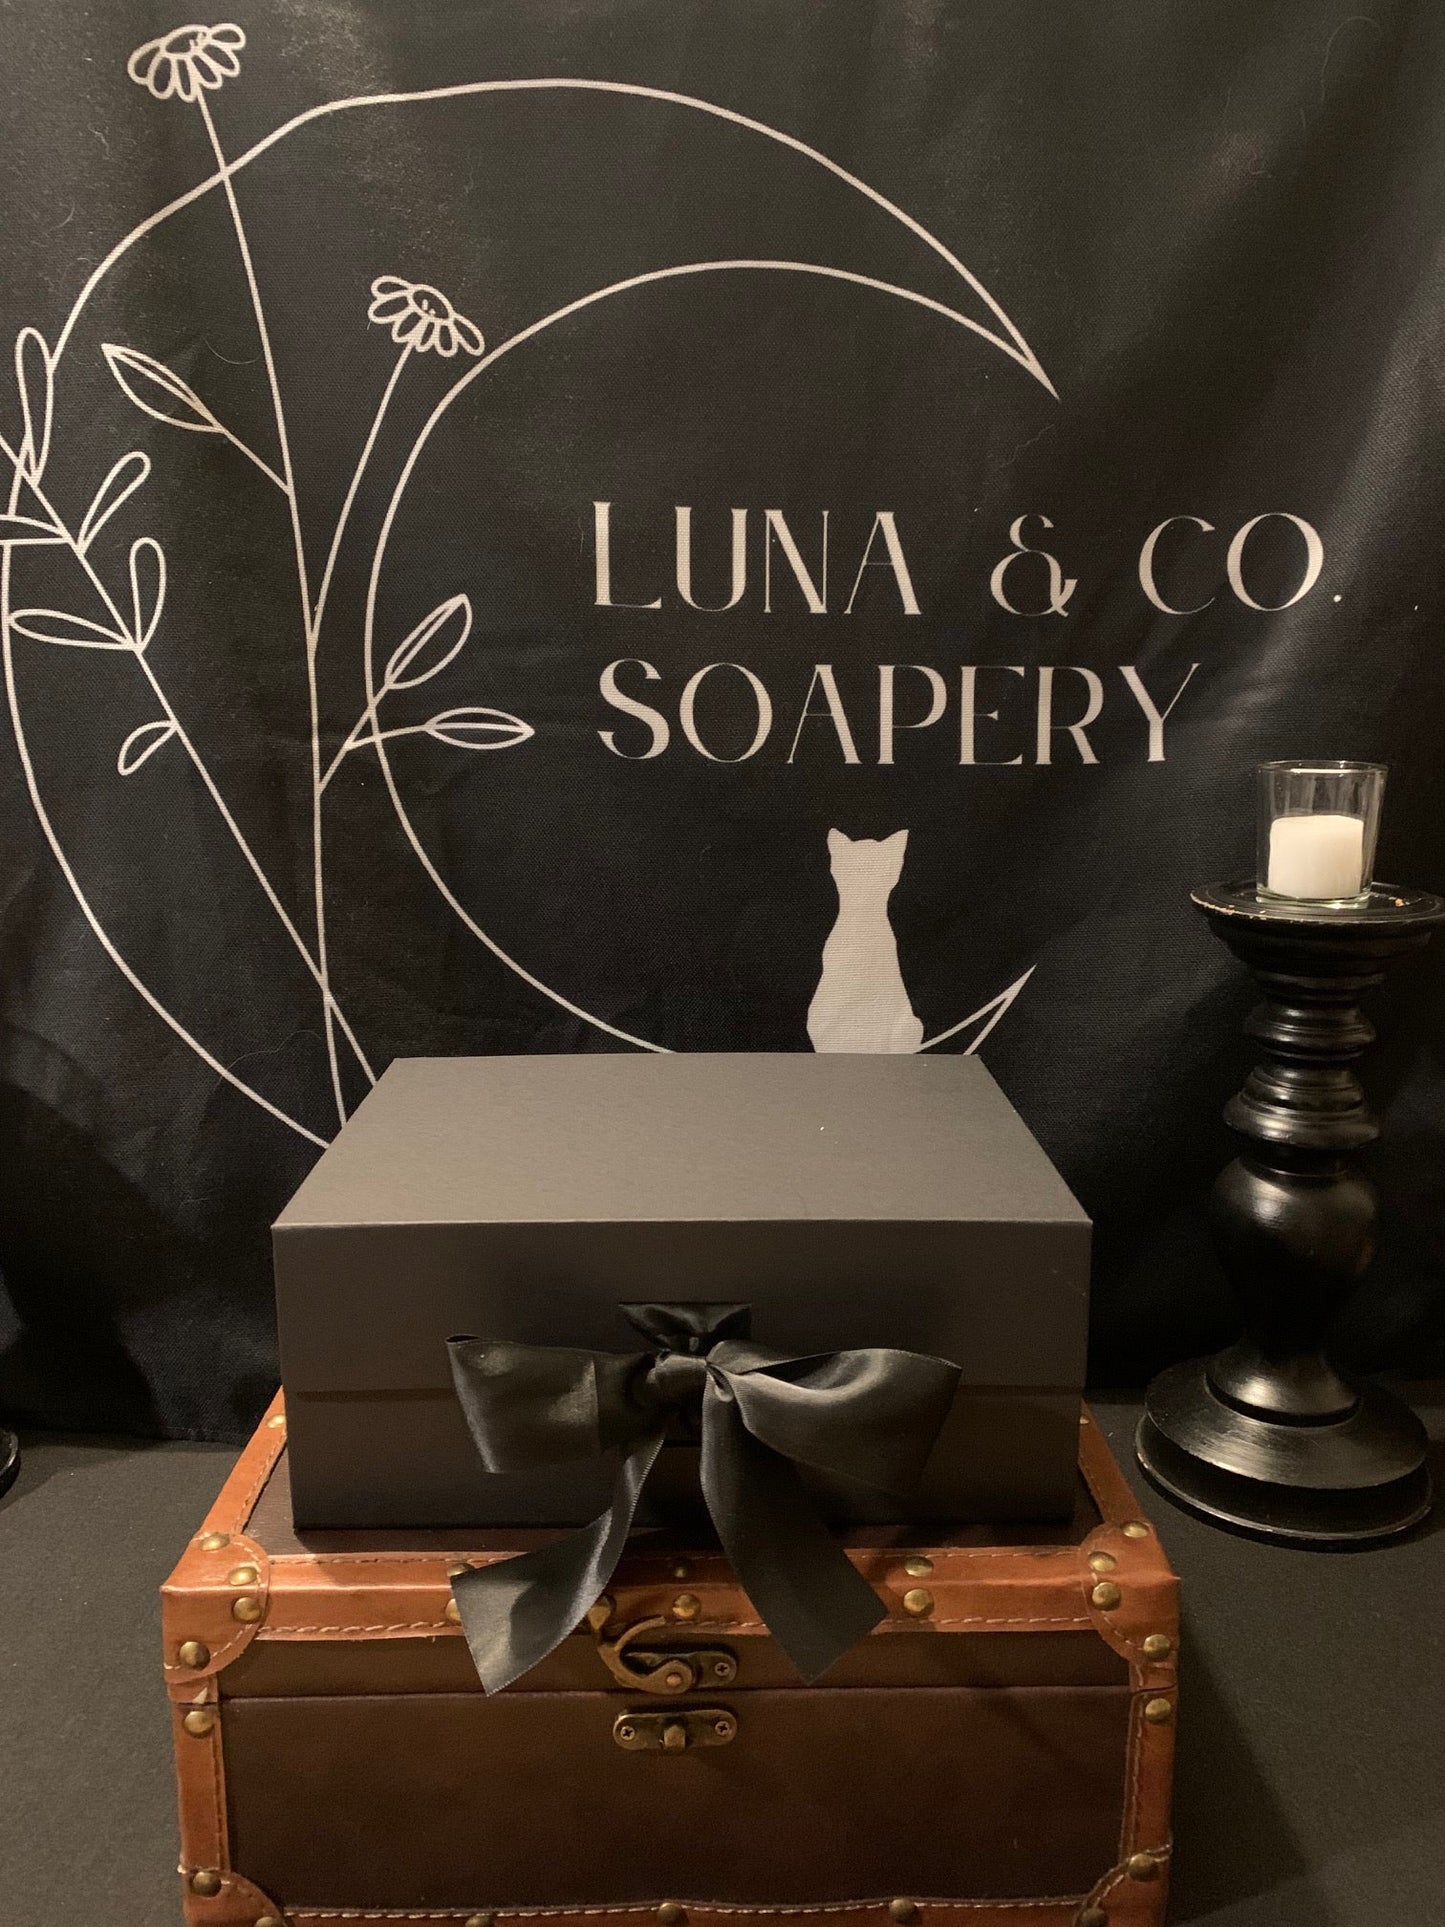 Celestial Gift Set - Luna & Co. SoaperyLuna & Co. SoaperyLuna & Co. Soapery